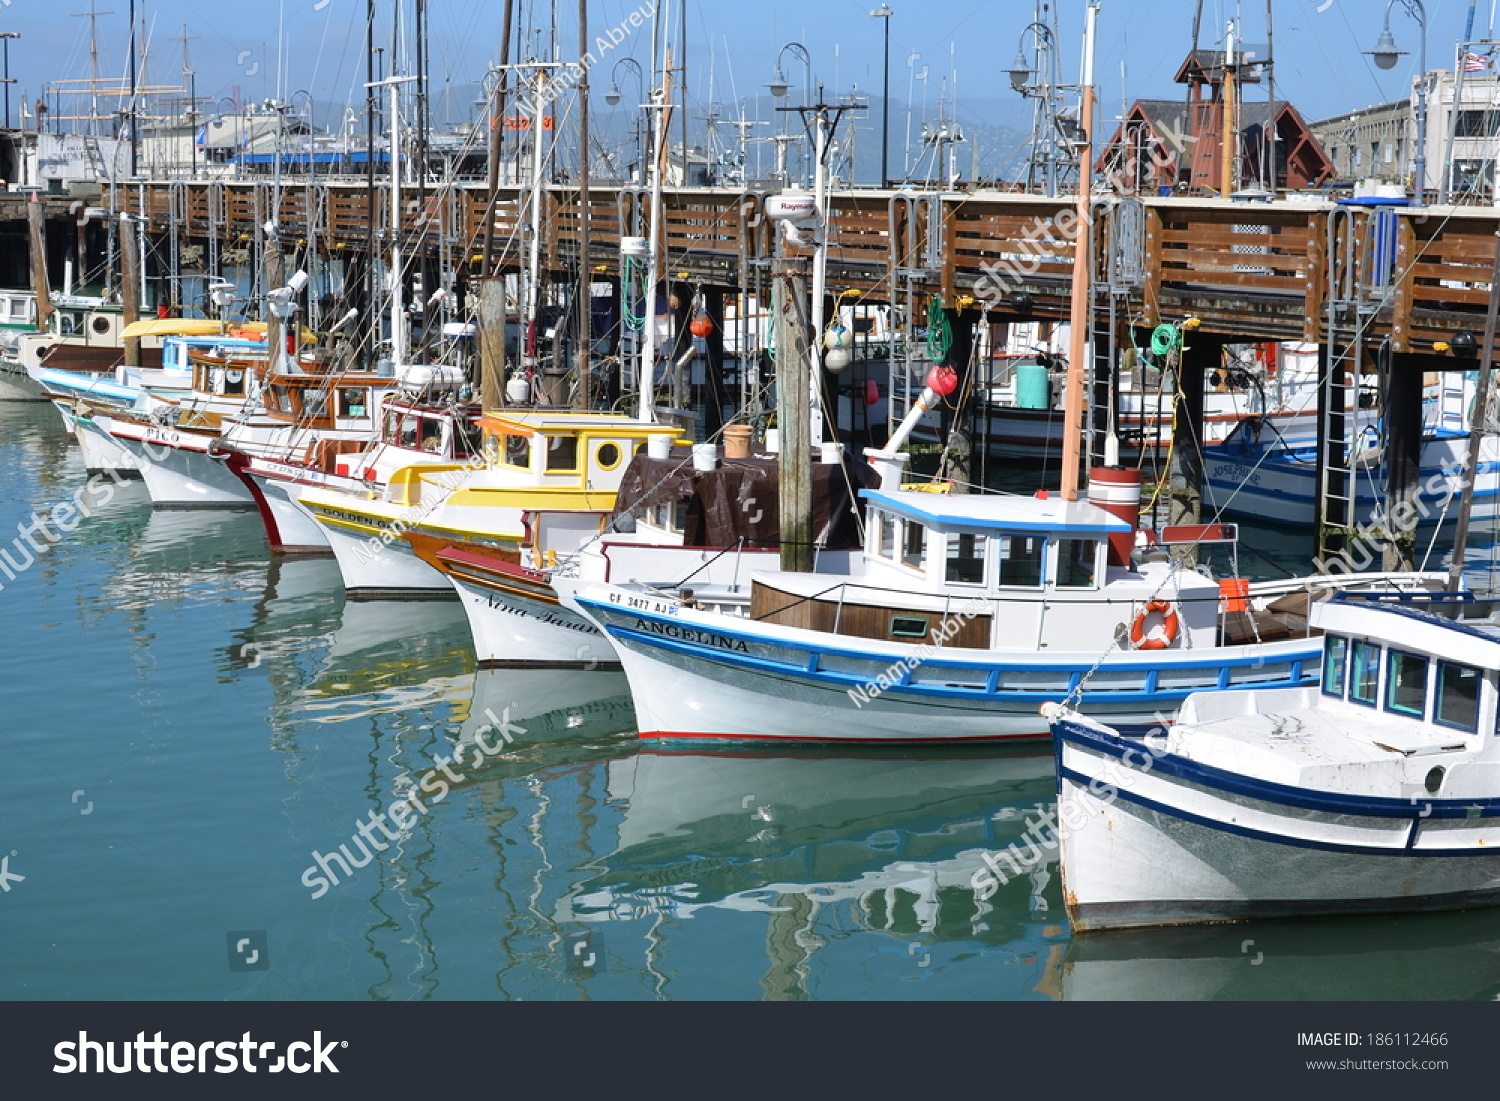 Fisherman's Wharf, San Francisco, California #186112466